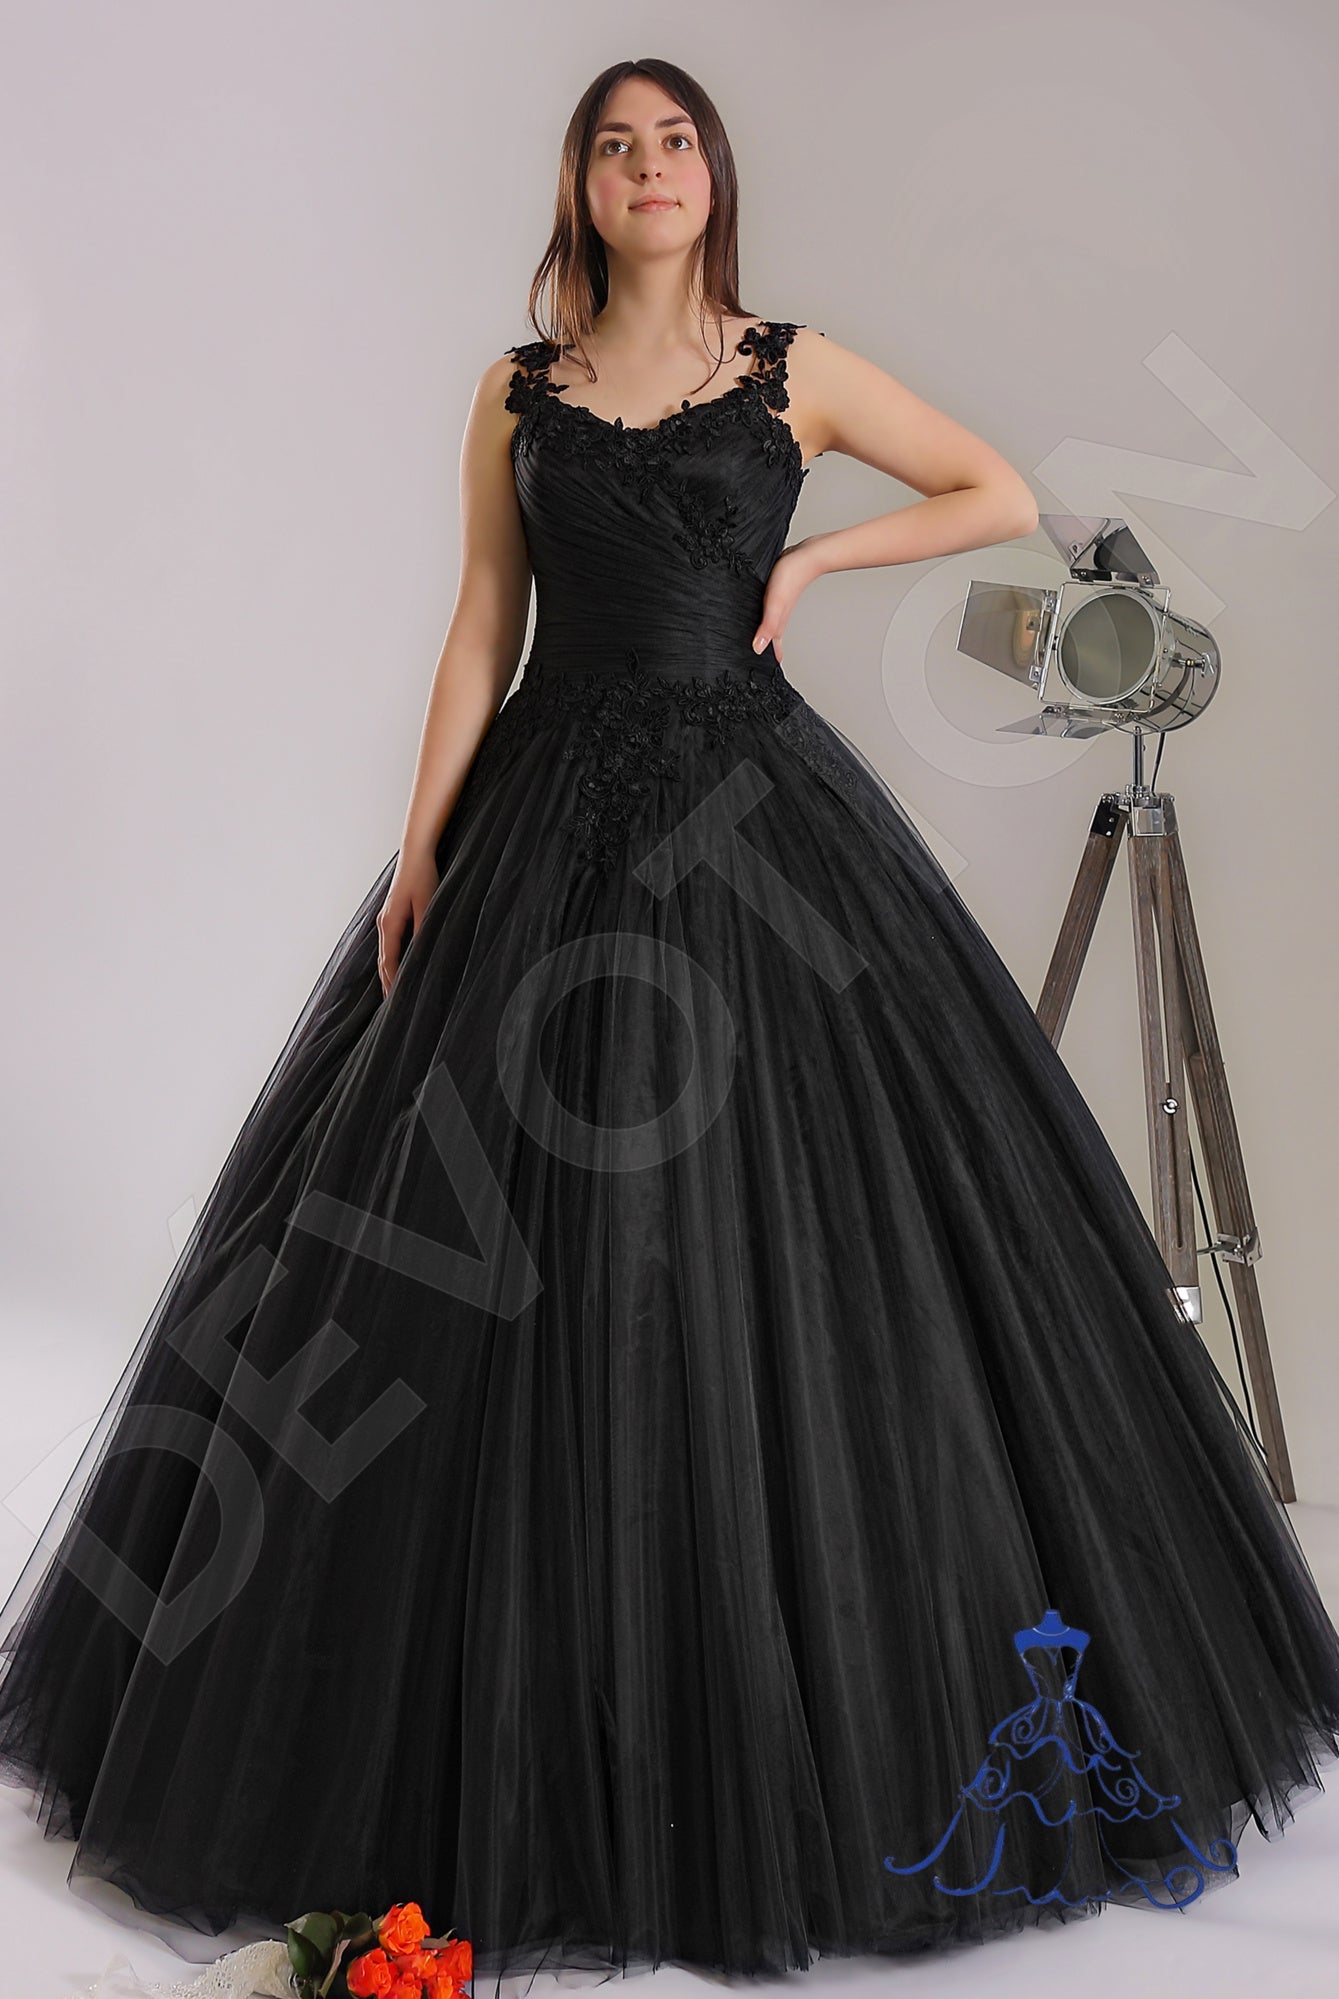 Leonie Open back Princess/Ball Gown Sleeveless Wedding Dress Front